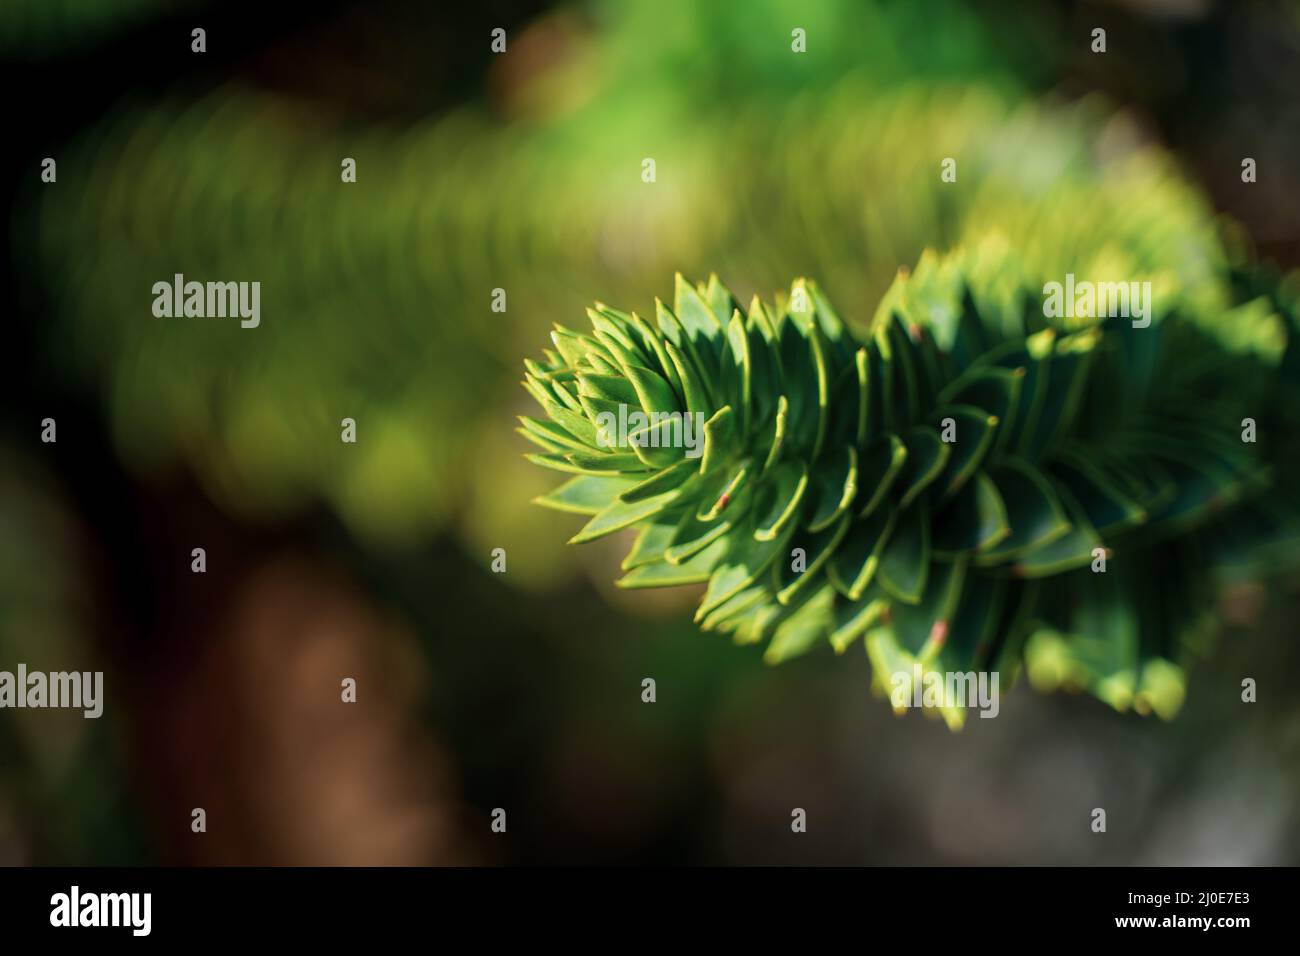 Selective focus shot of monkey puzzle tree (araucaria araucana) Stock Photo